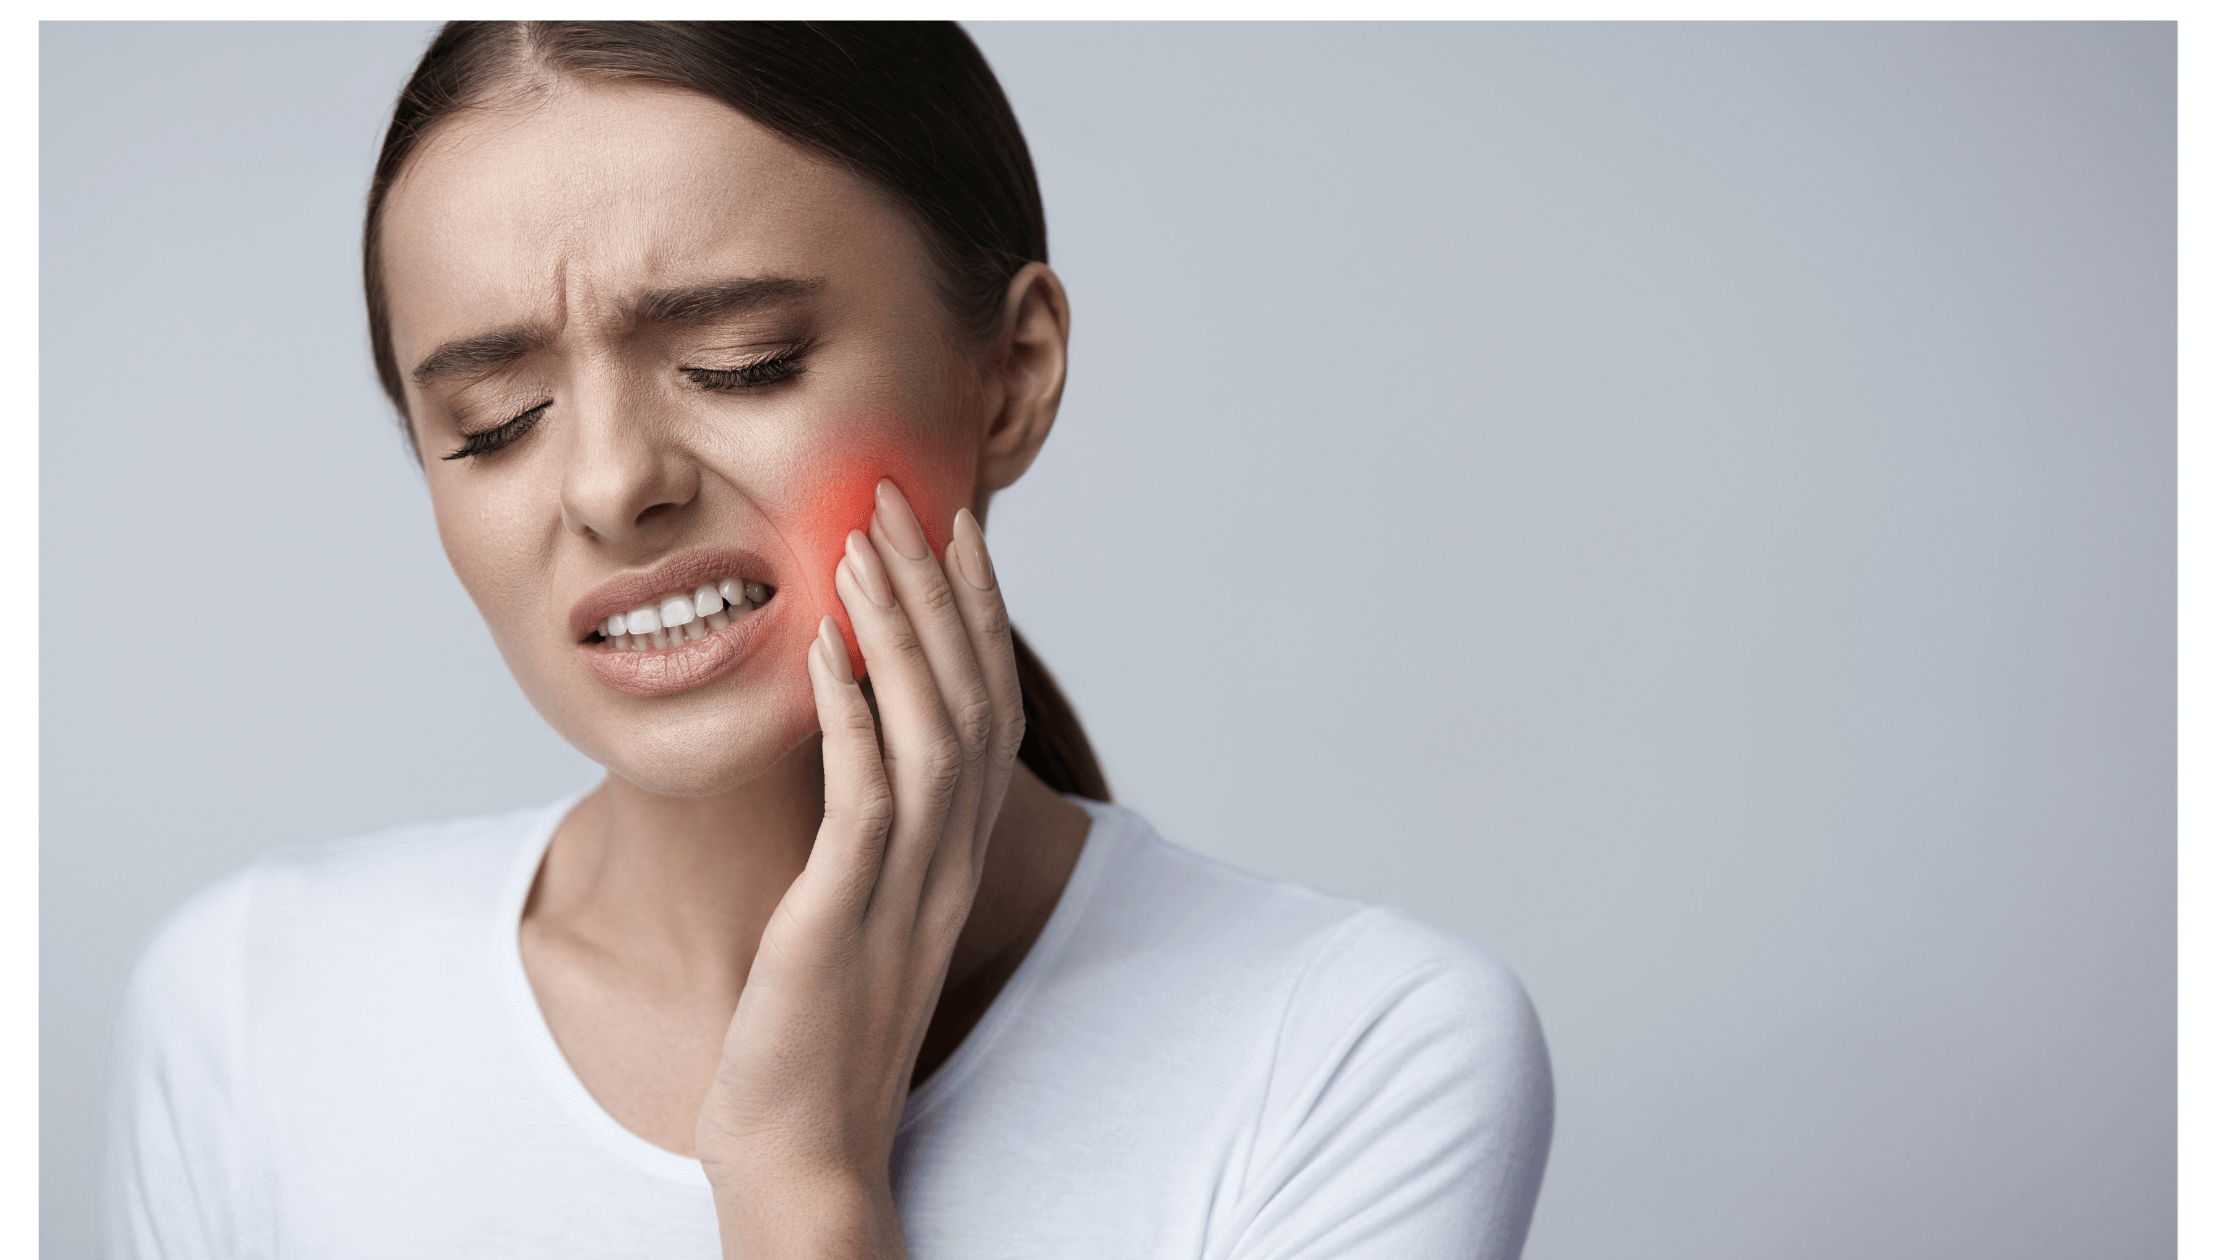 Tips for teeth pain